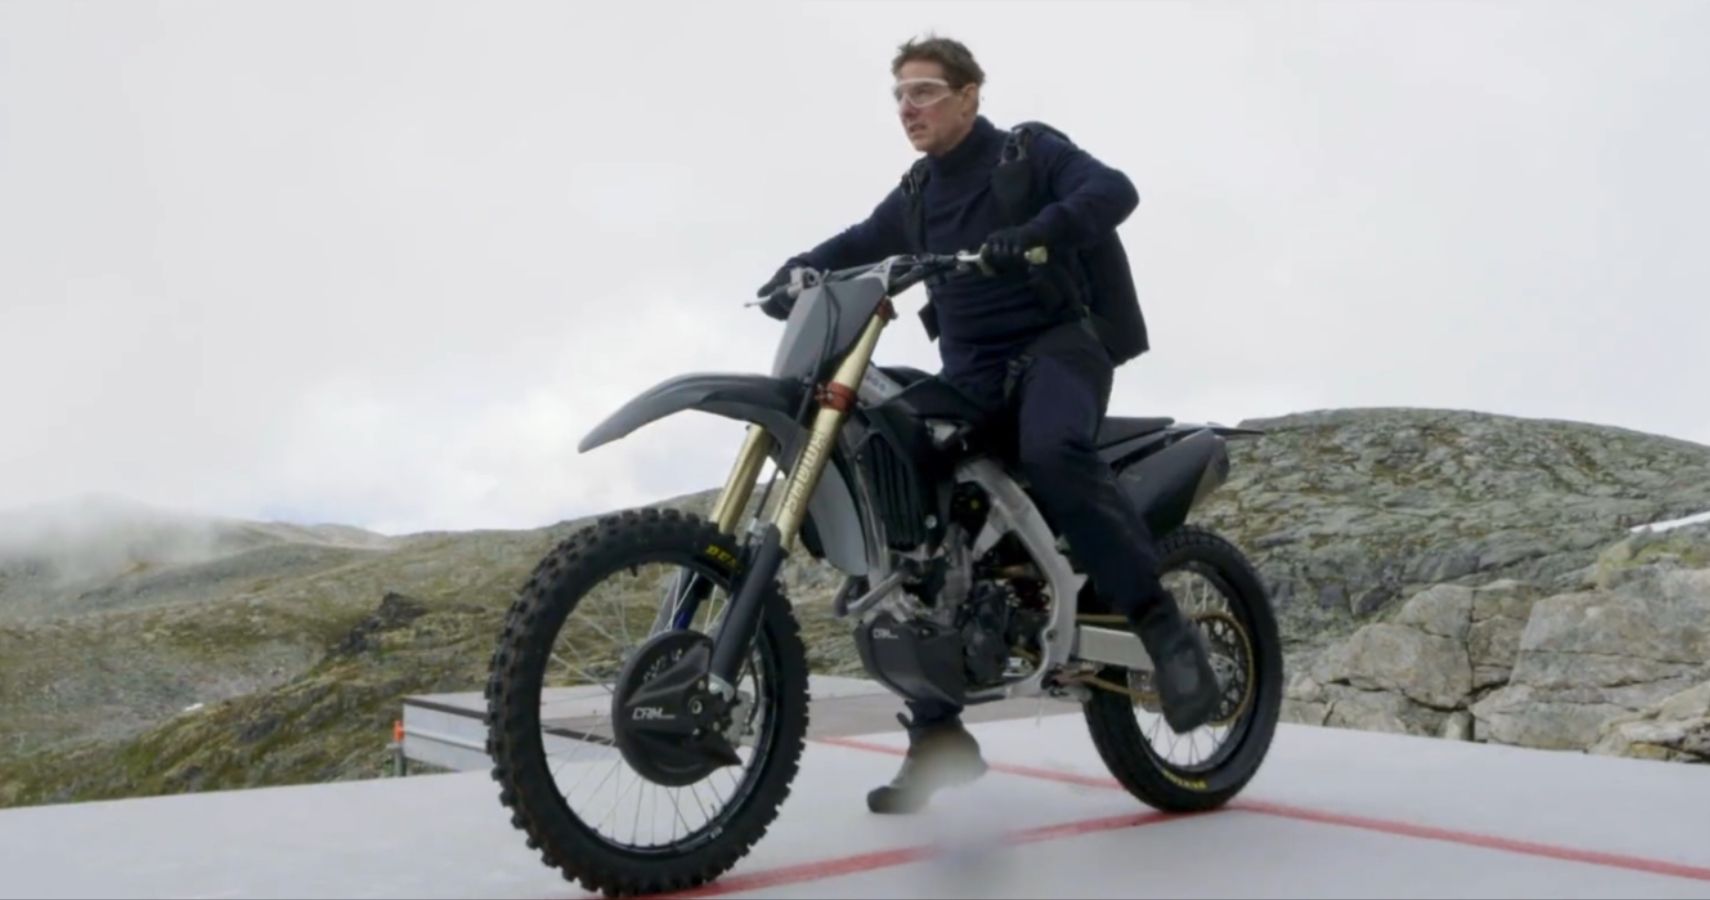 Tom Cruise Motorcycle Stunt In Norway